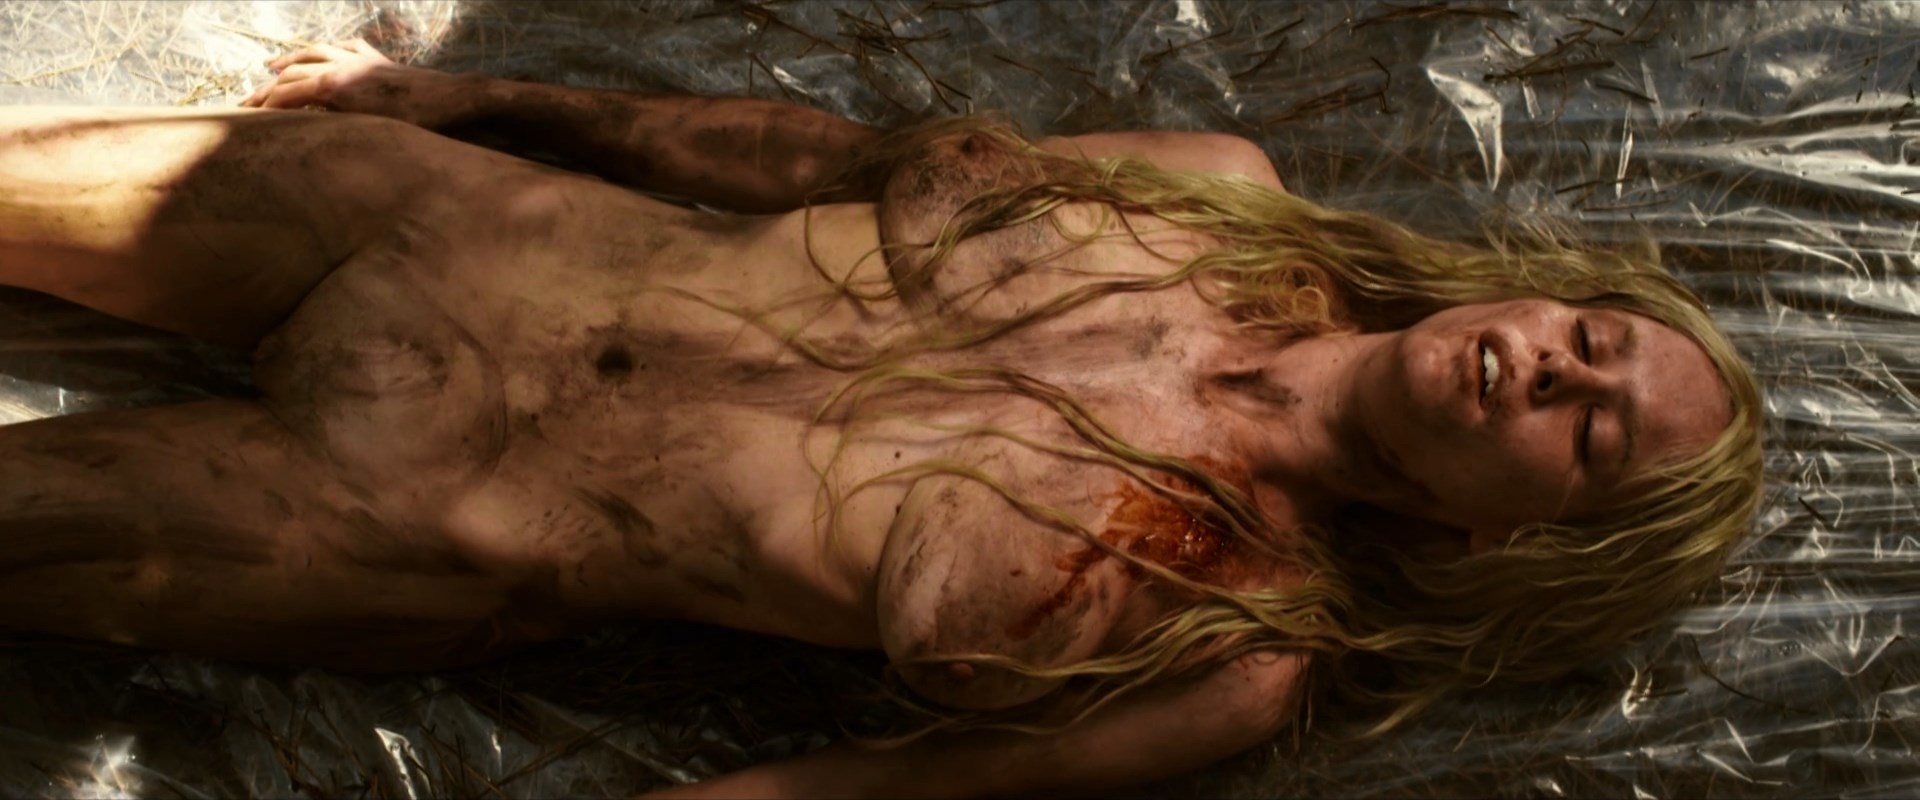 Nude Video Celebs Maria Forque Nude Into The Mud 2016